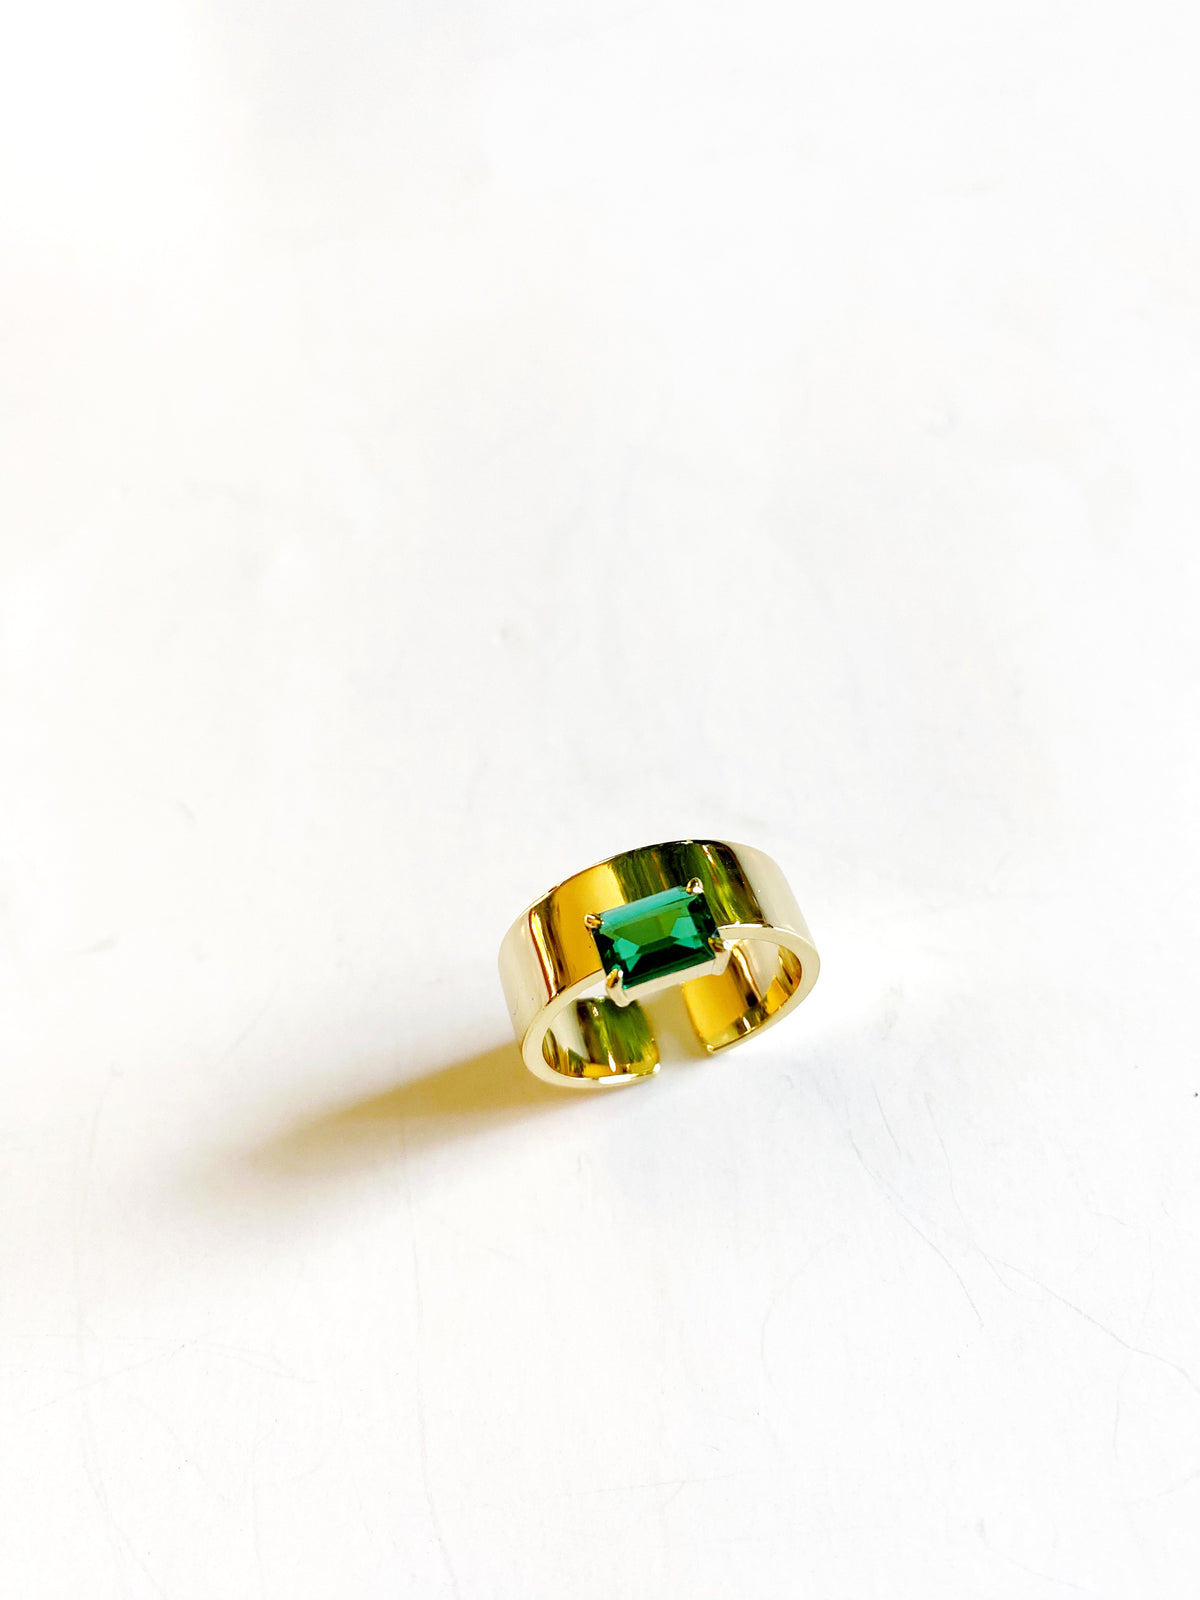 Emerald Baguette Cut Monolith Adjustable Ring